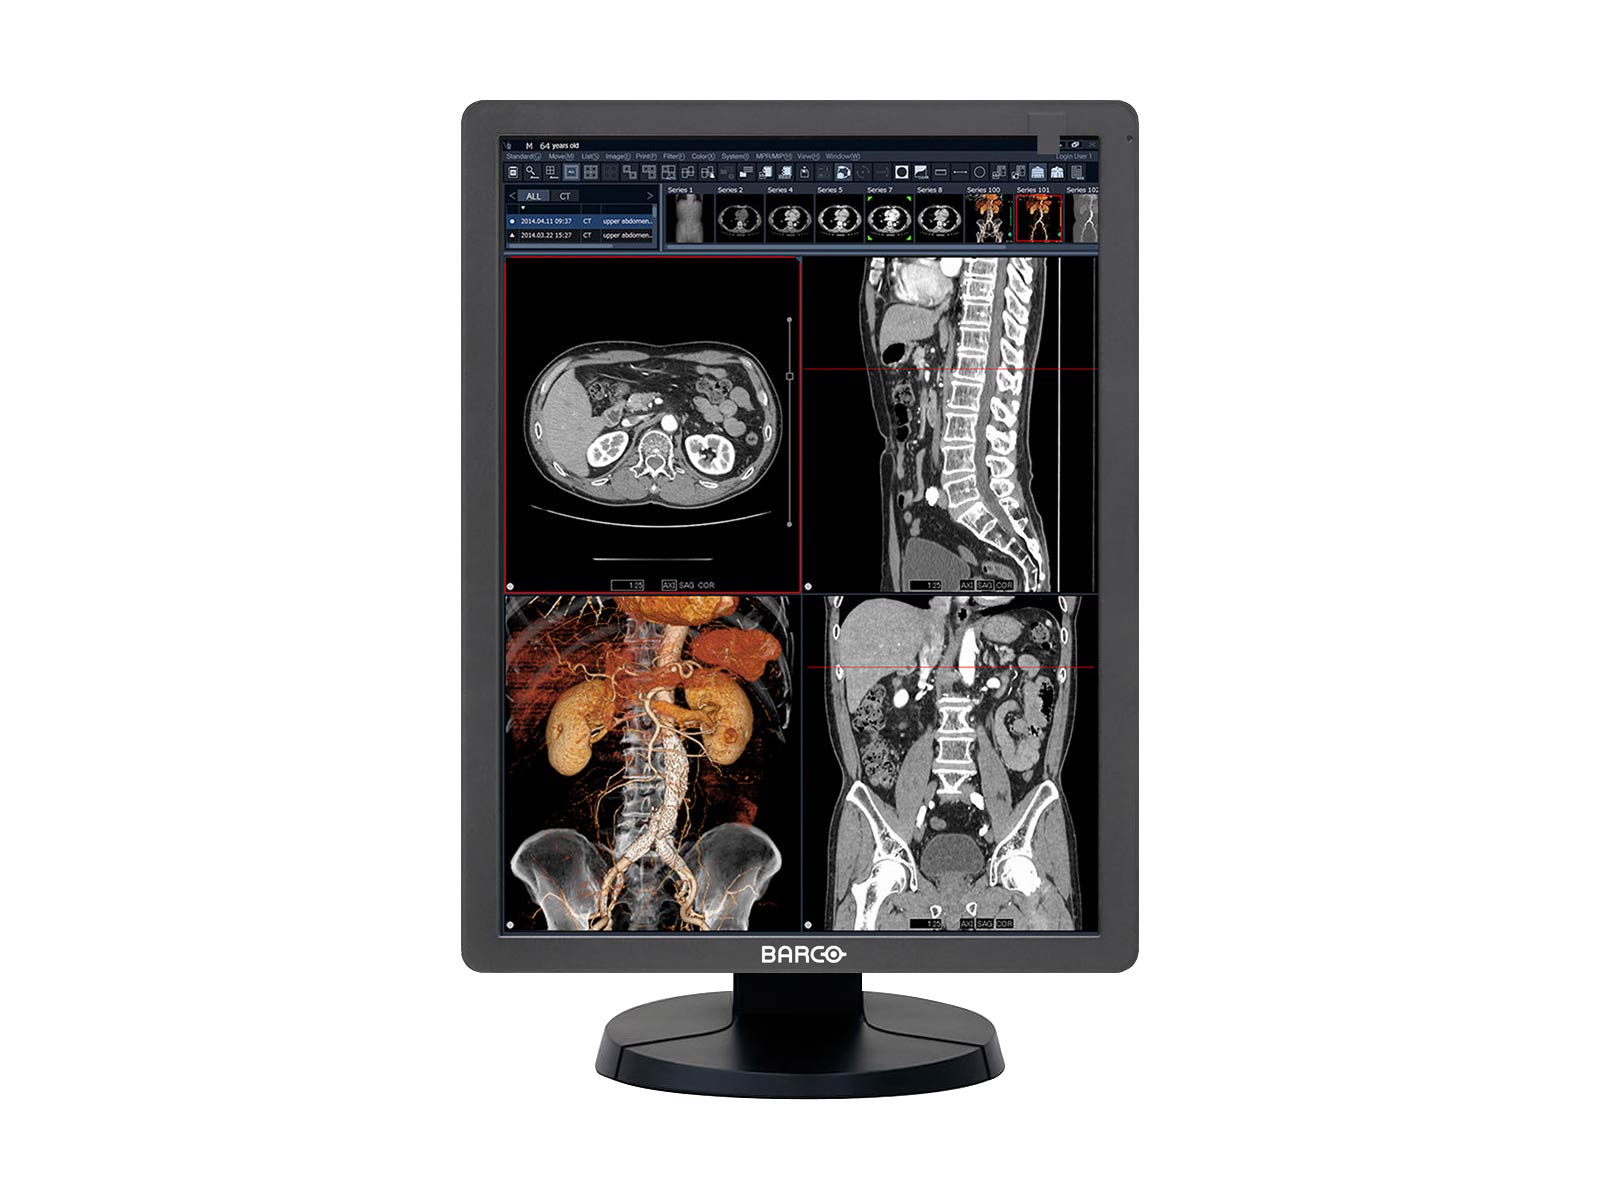 Barco Eonis MDRC-2321 2MP 21" SNIB HLX Color Clinical Review Display Monitors.com 